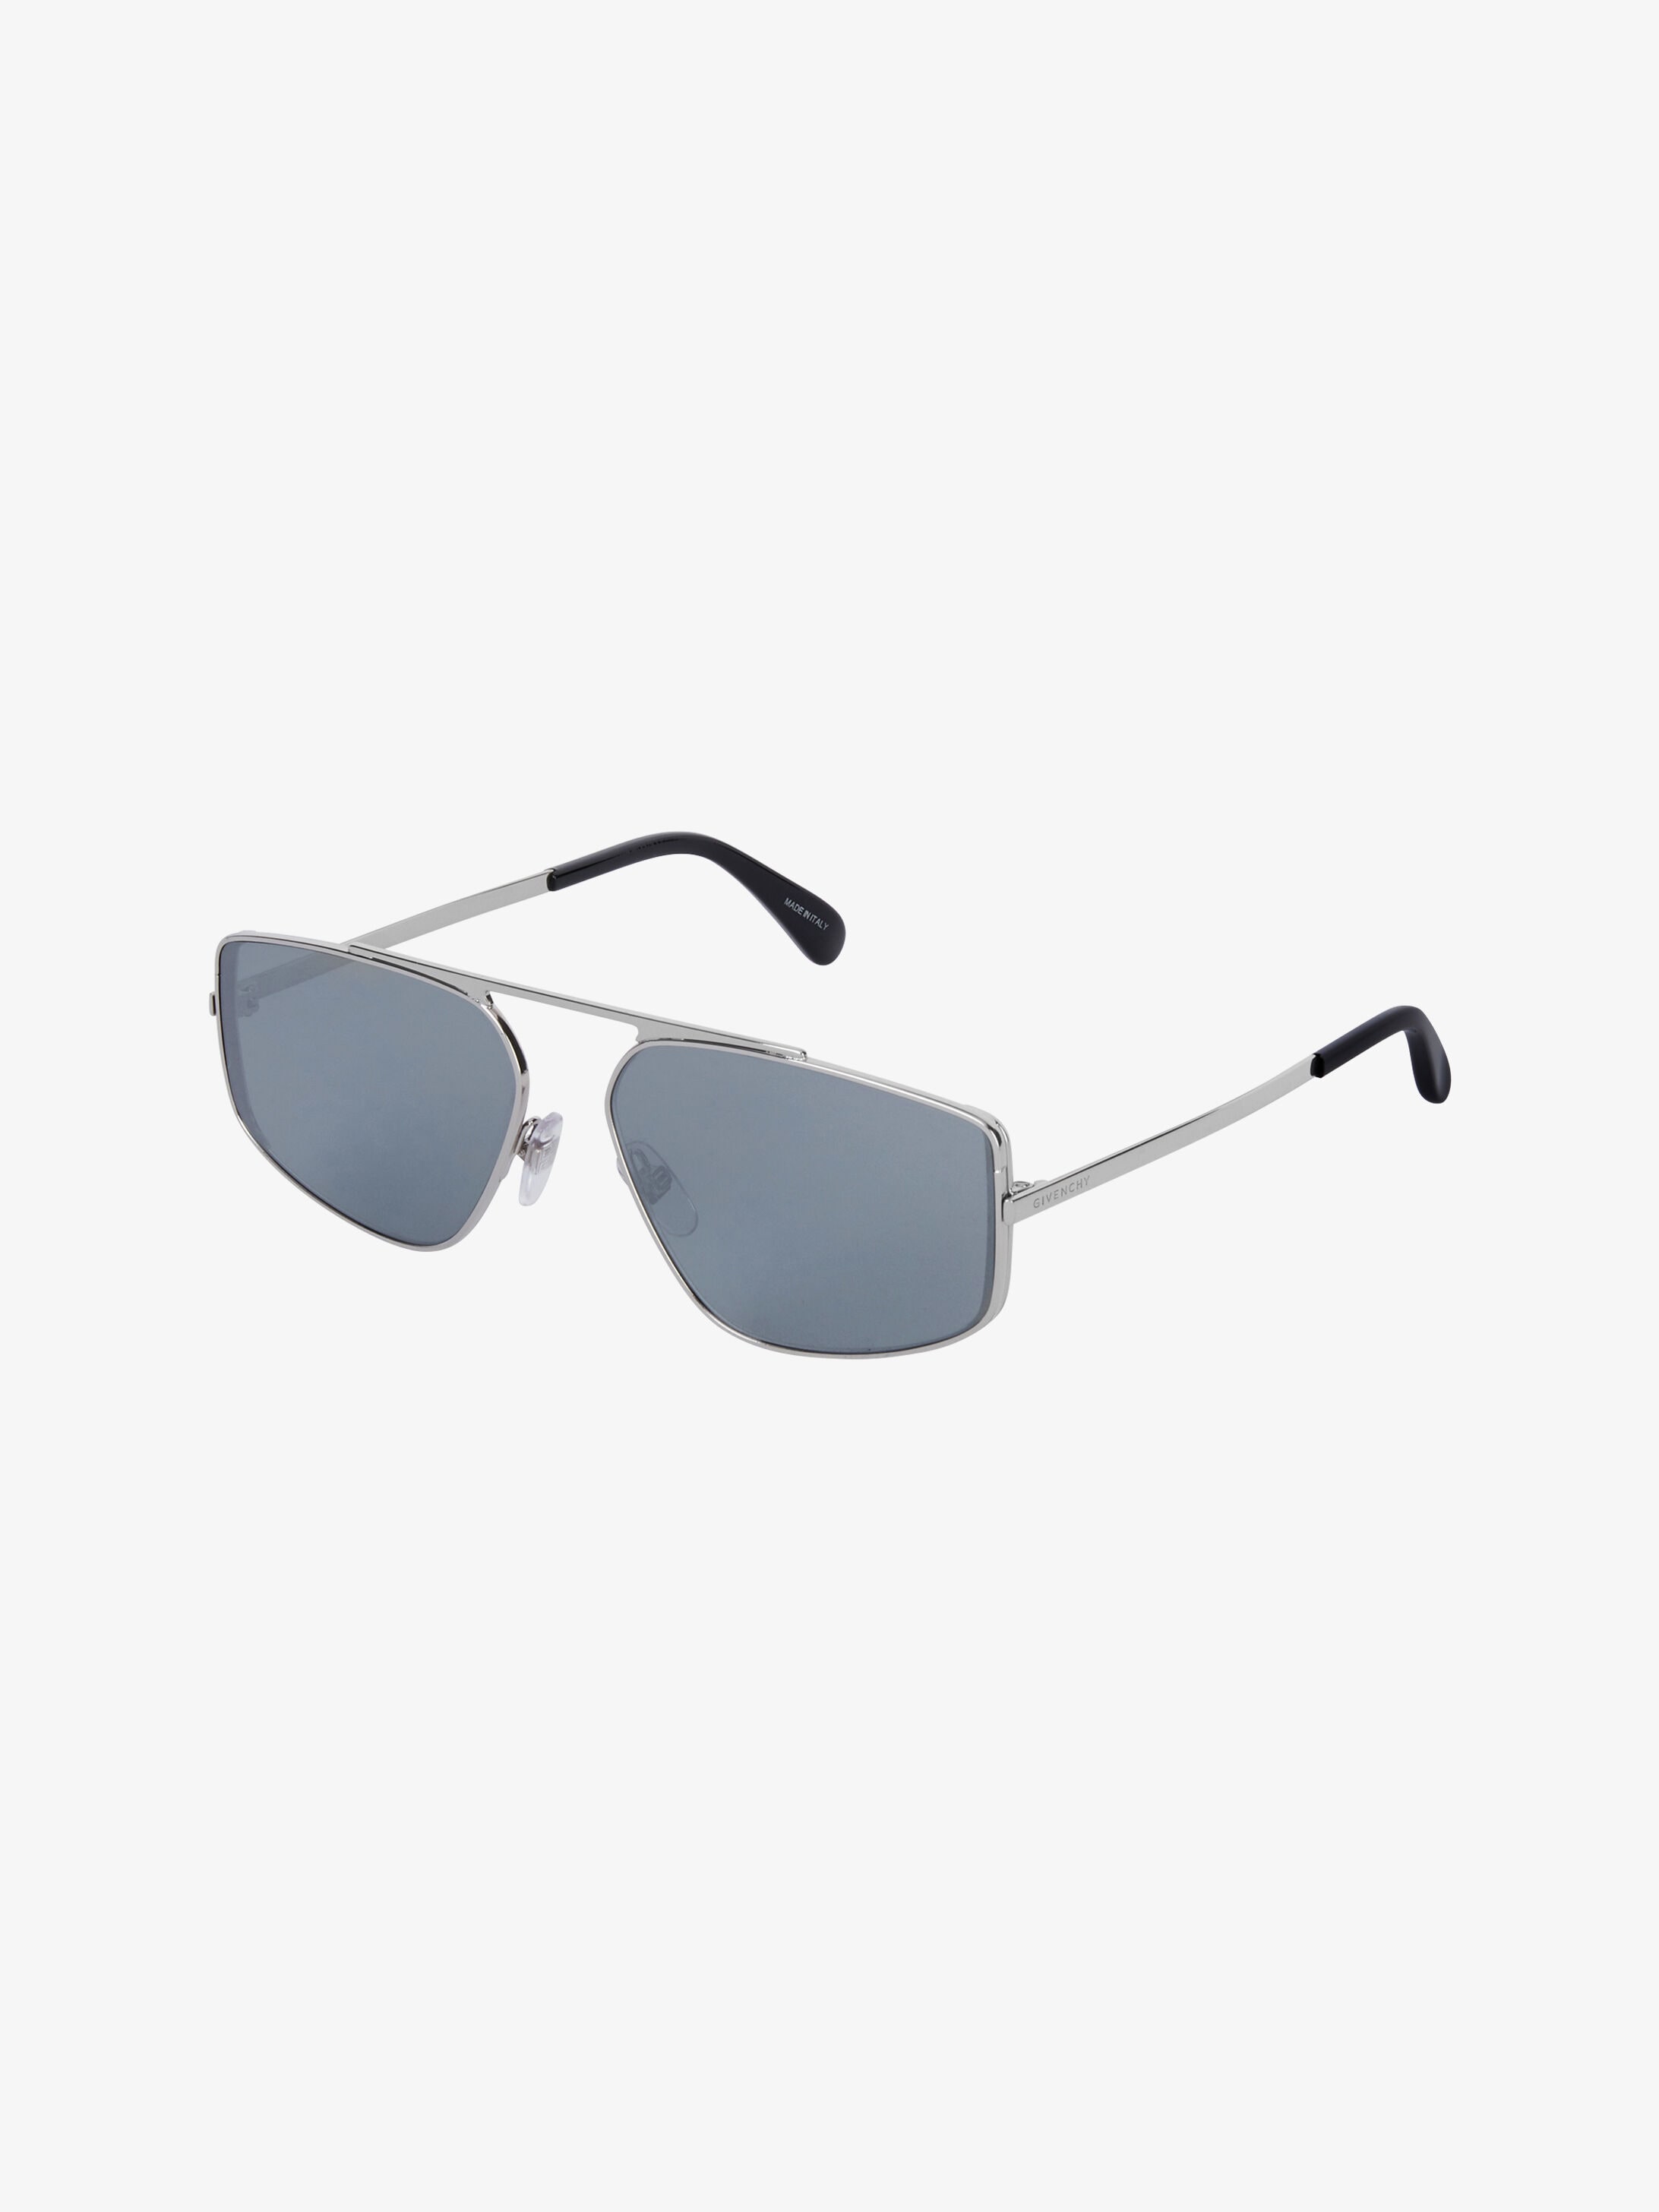 givenchy sunglasses sale